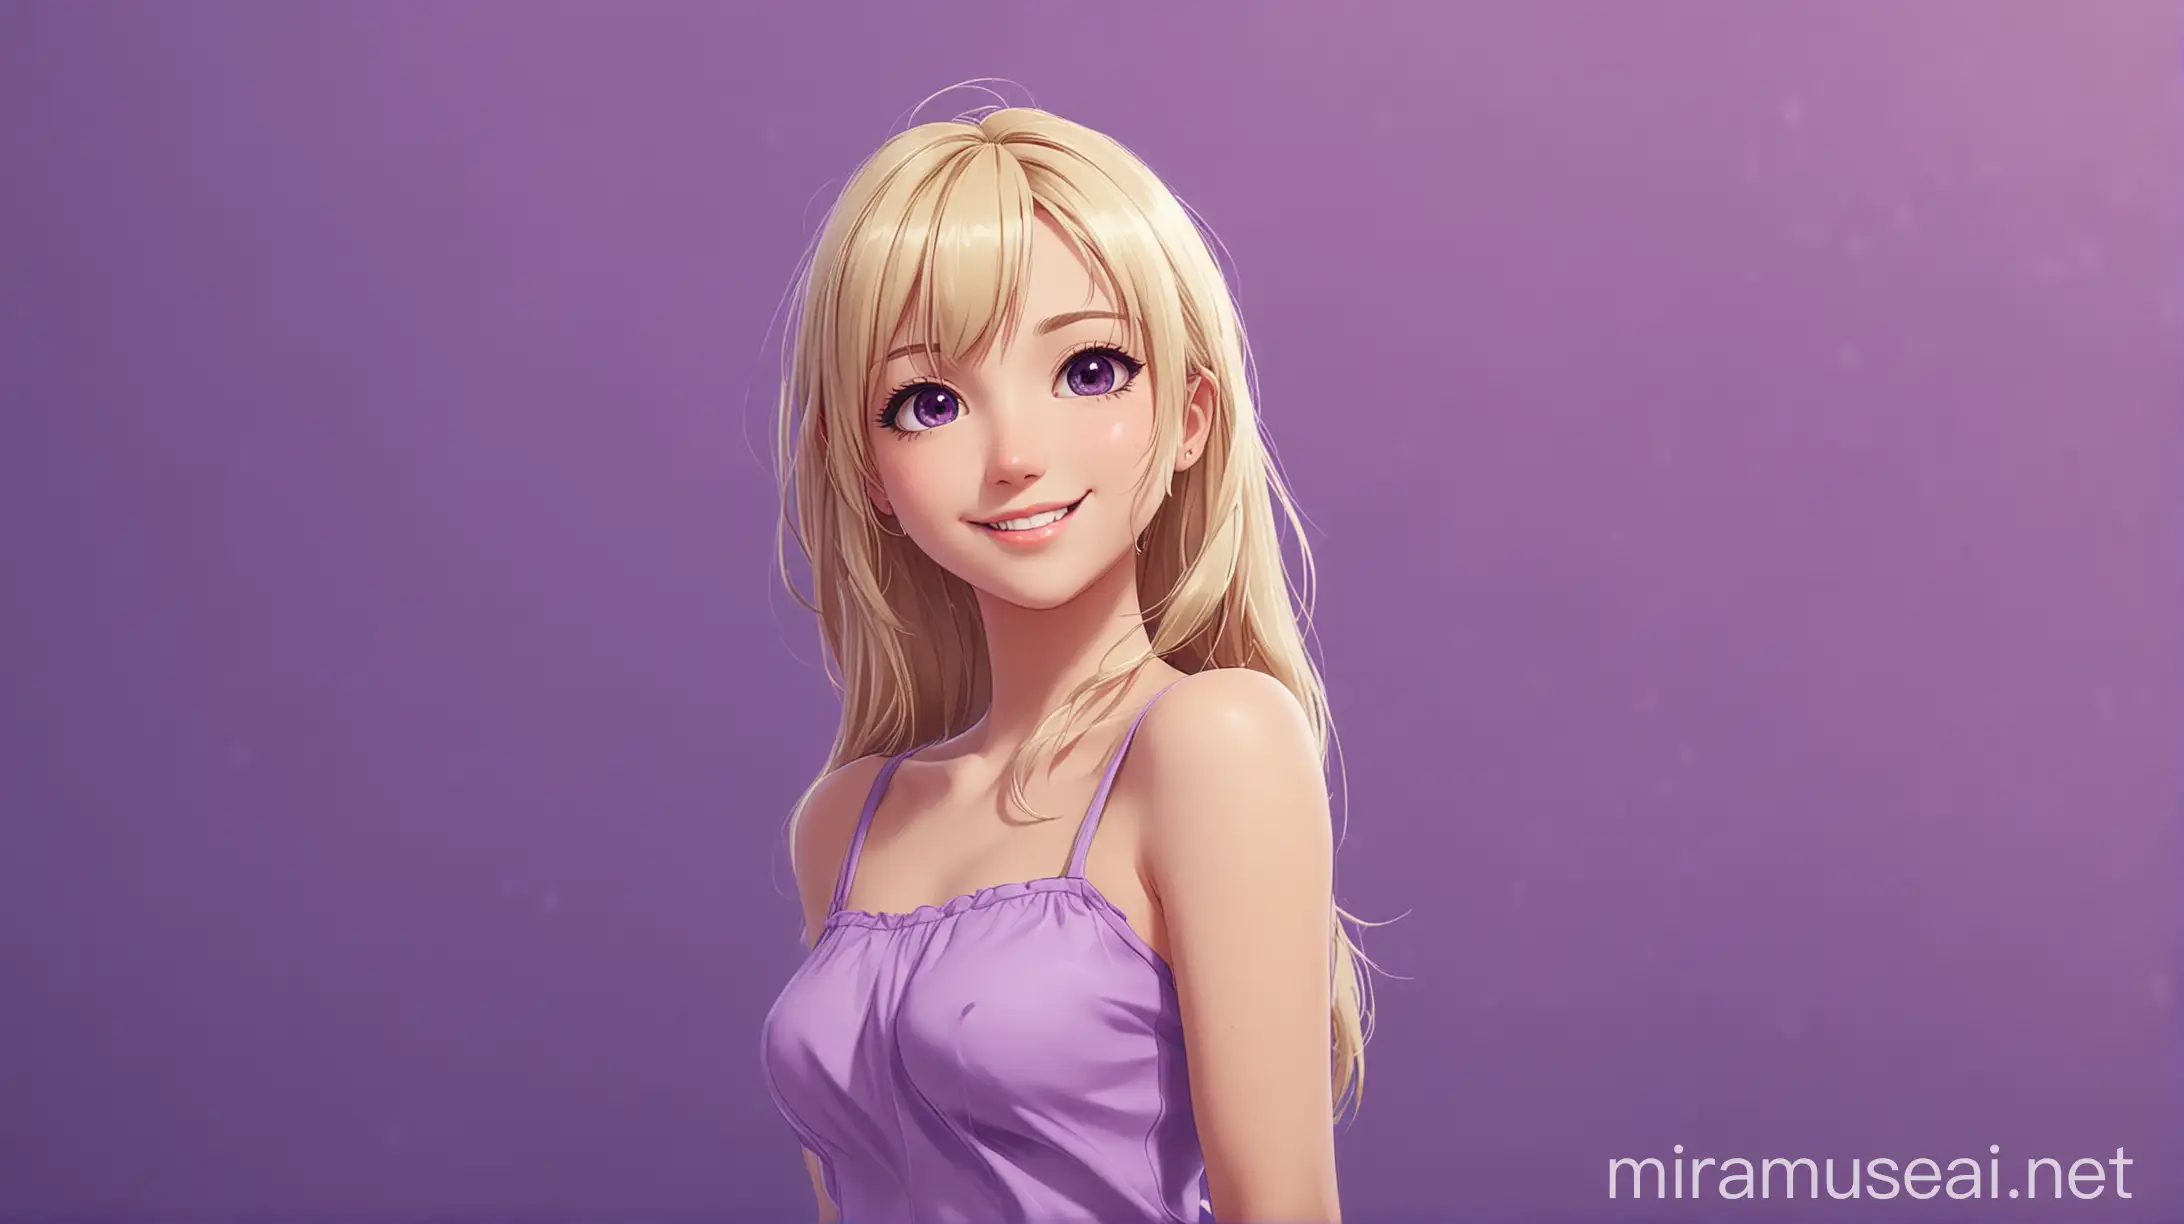 Smiling Blonde Anime Girl on Vibrant Purple Background